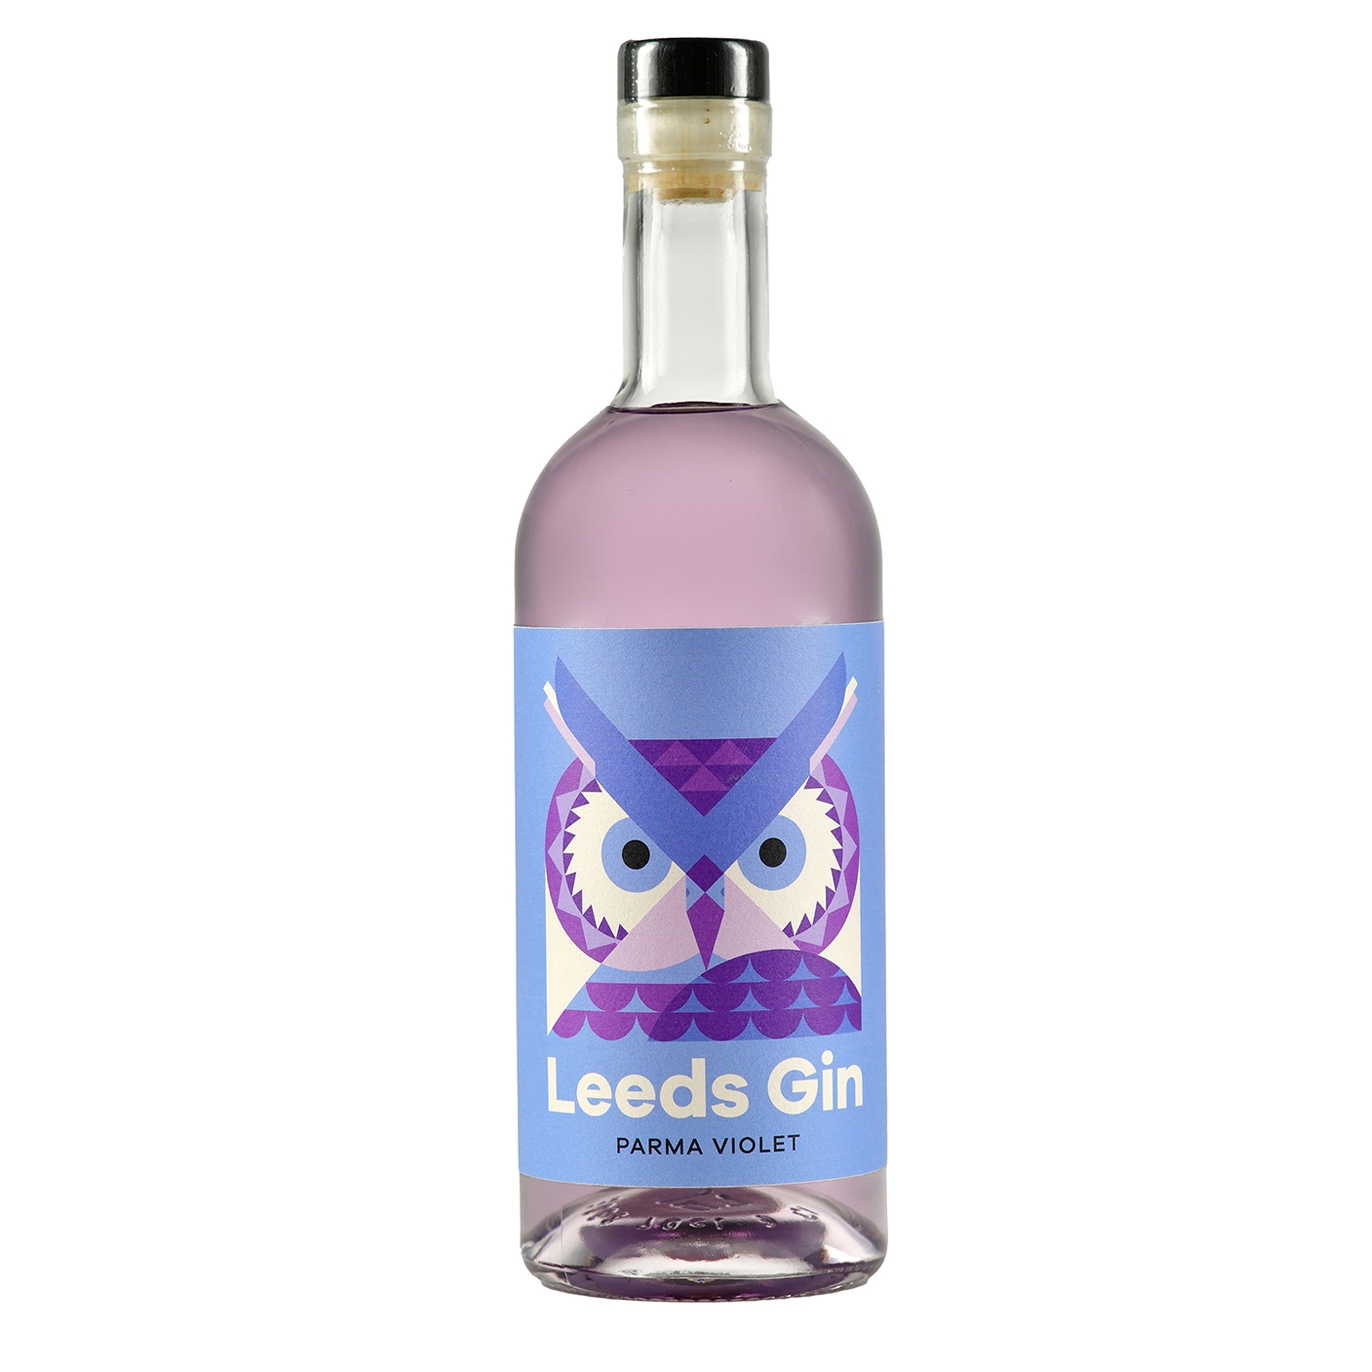 Leeds Gin Parma Violet Gin